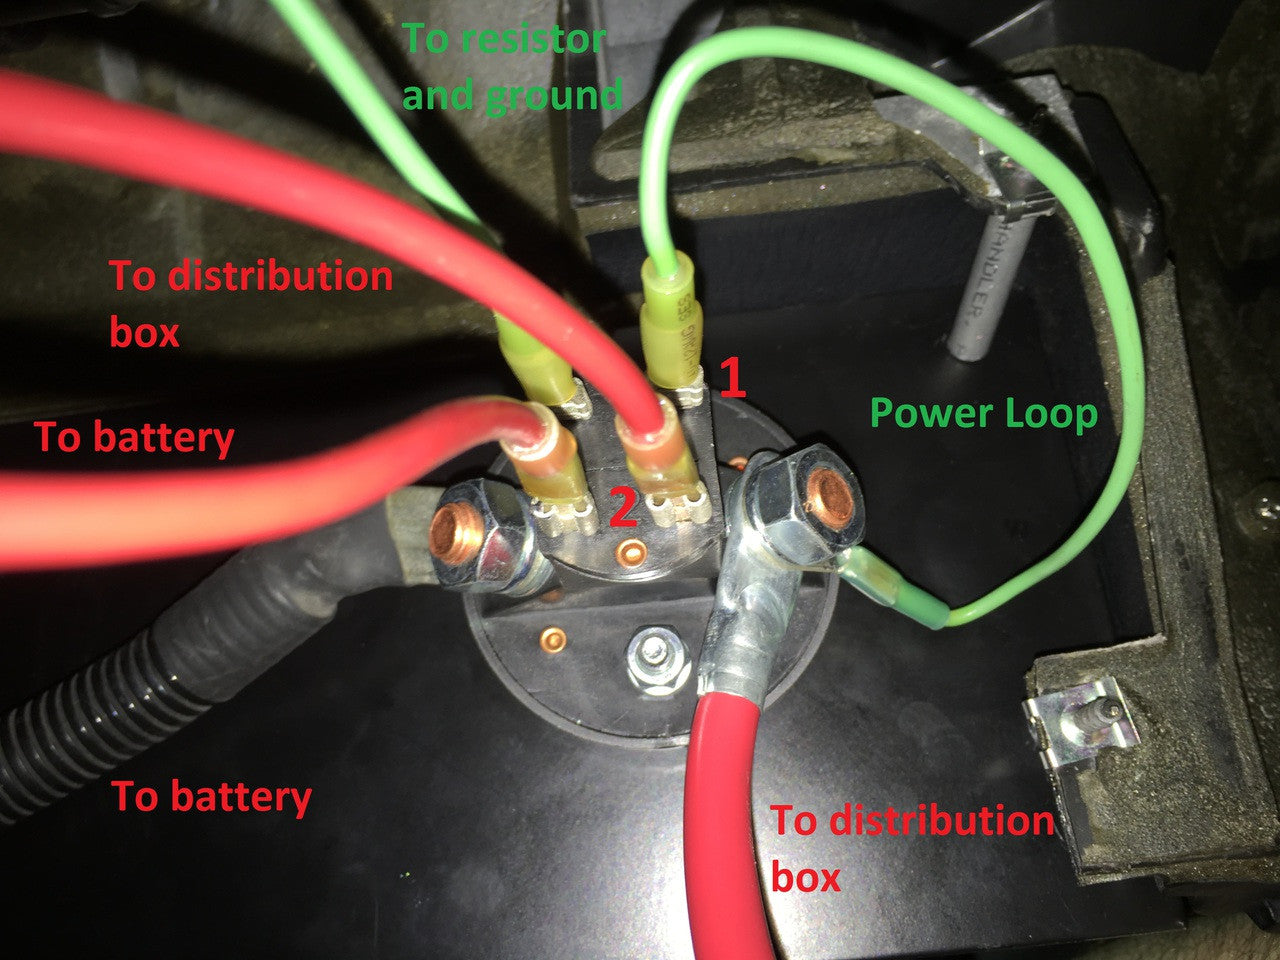 HARD Motorsport - BMW E36 Carbon Fiber Battery Disconnect Kill Switch Kit (E36BATTKILLCF)